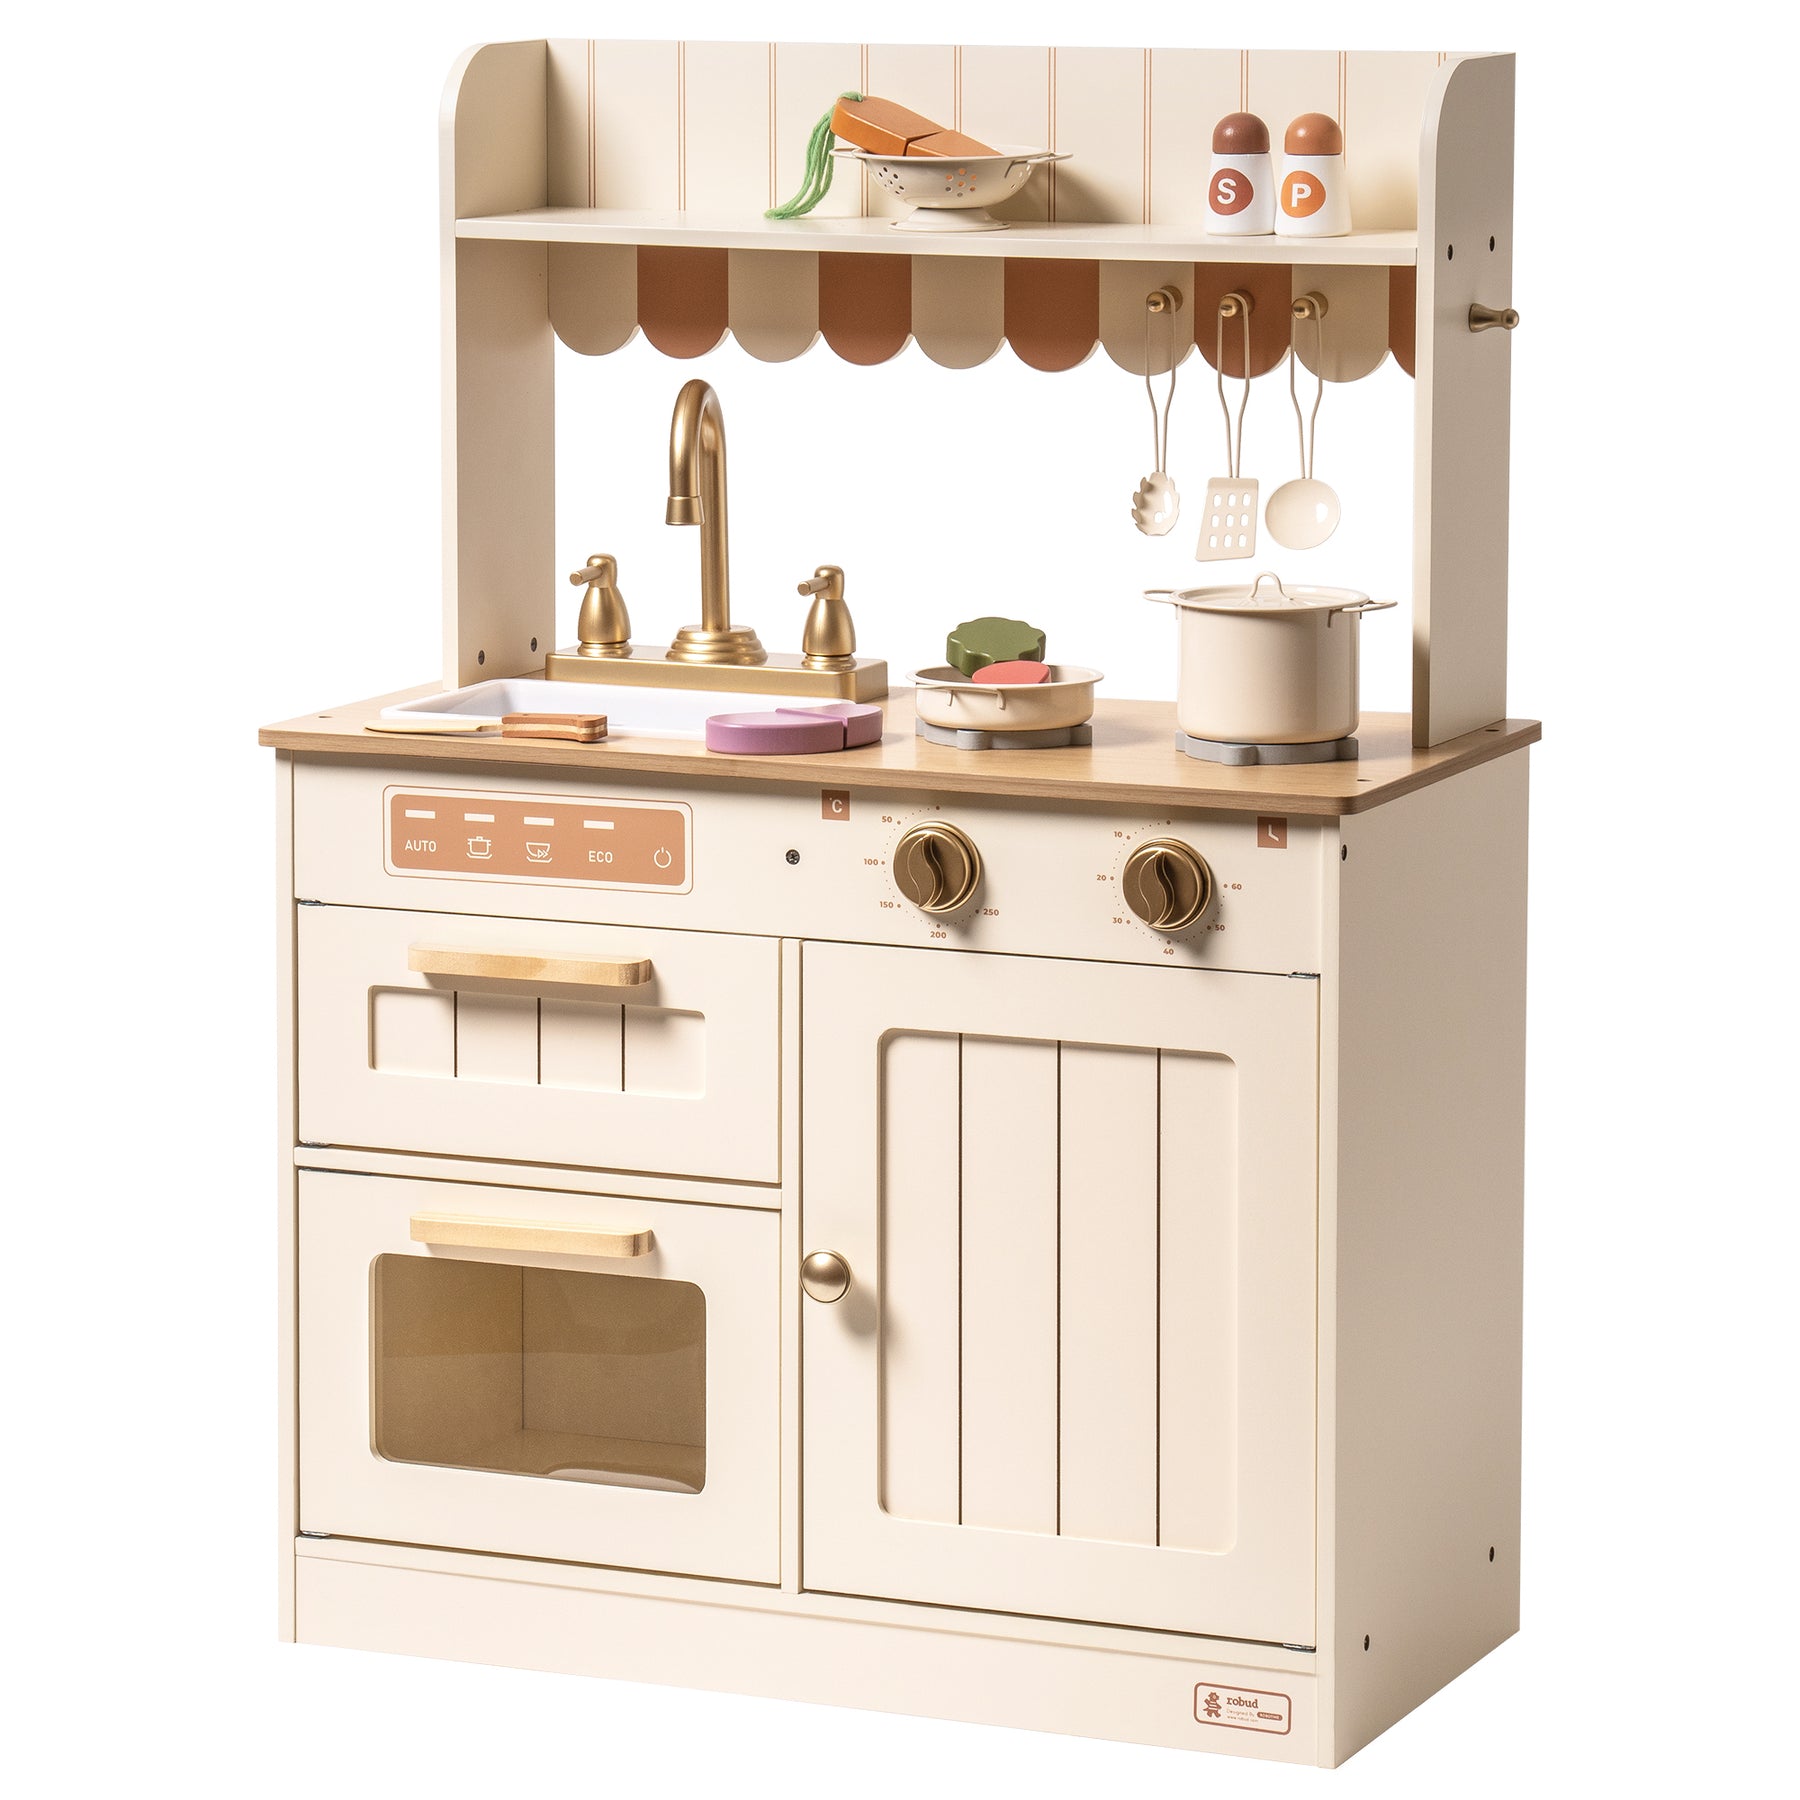 Play Kitchen, Wooden Kids Kitchen Playset for Kids,American Vintage Style - Tonkn